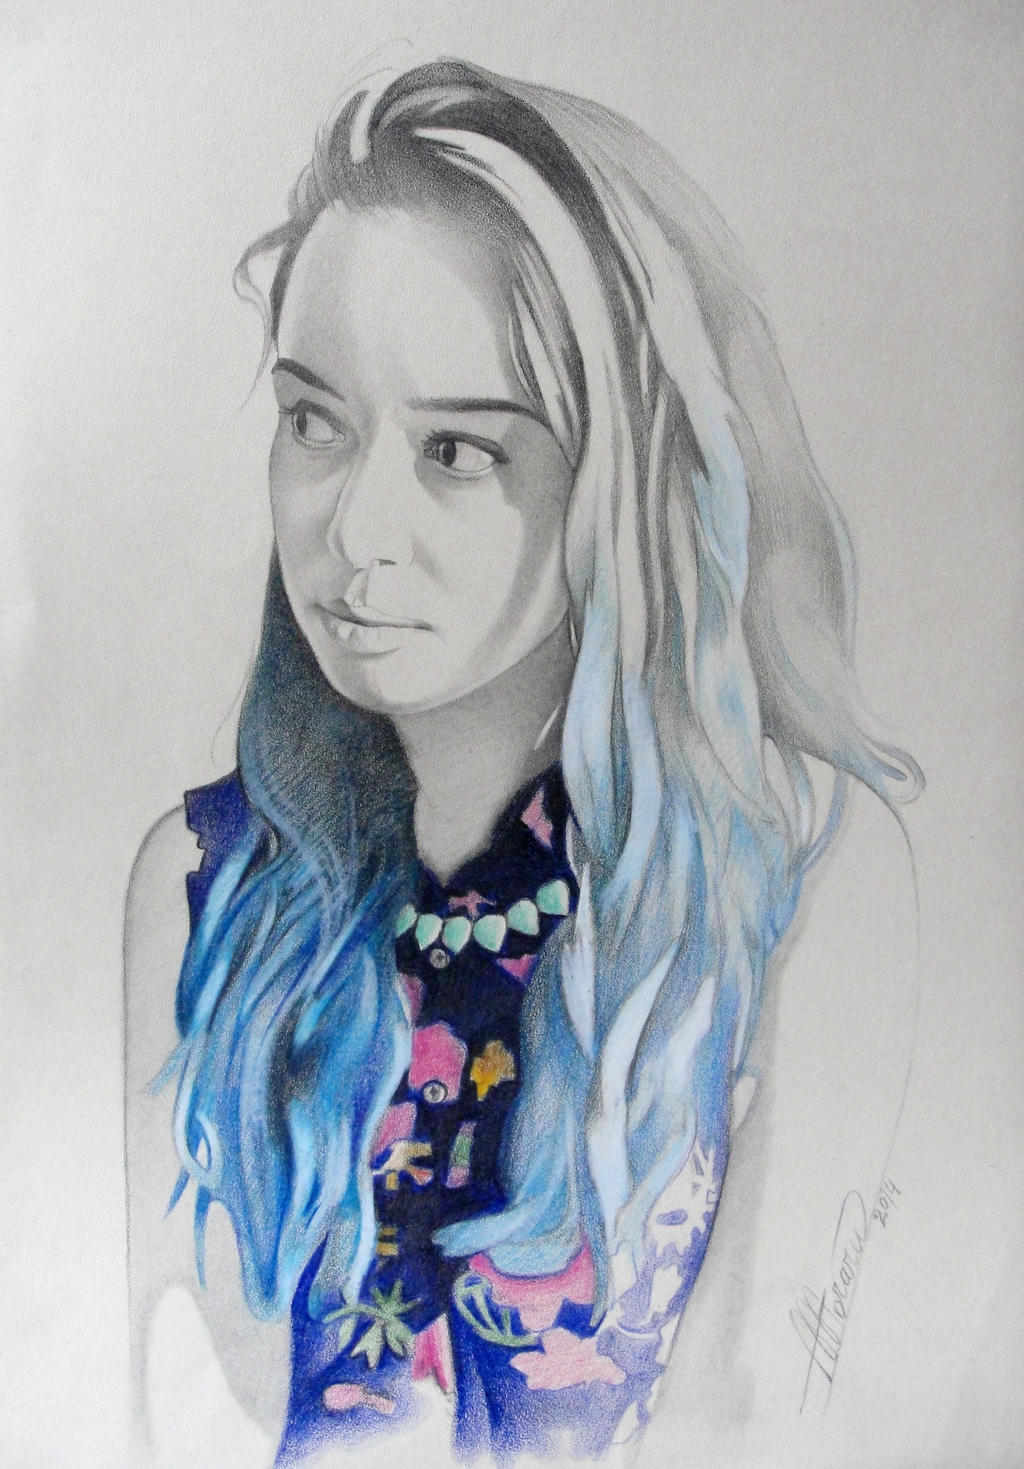 Girl with Blue hair by AdrianMoraru on DeviantArt